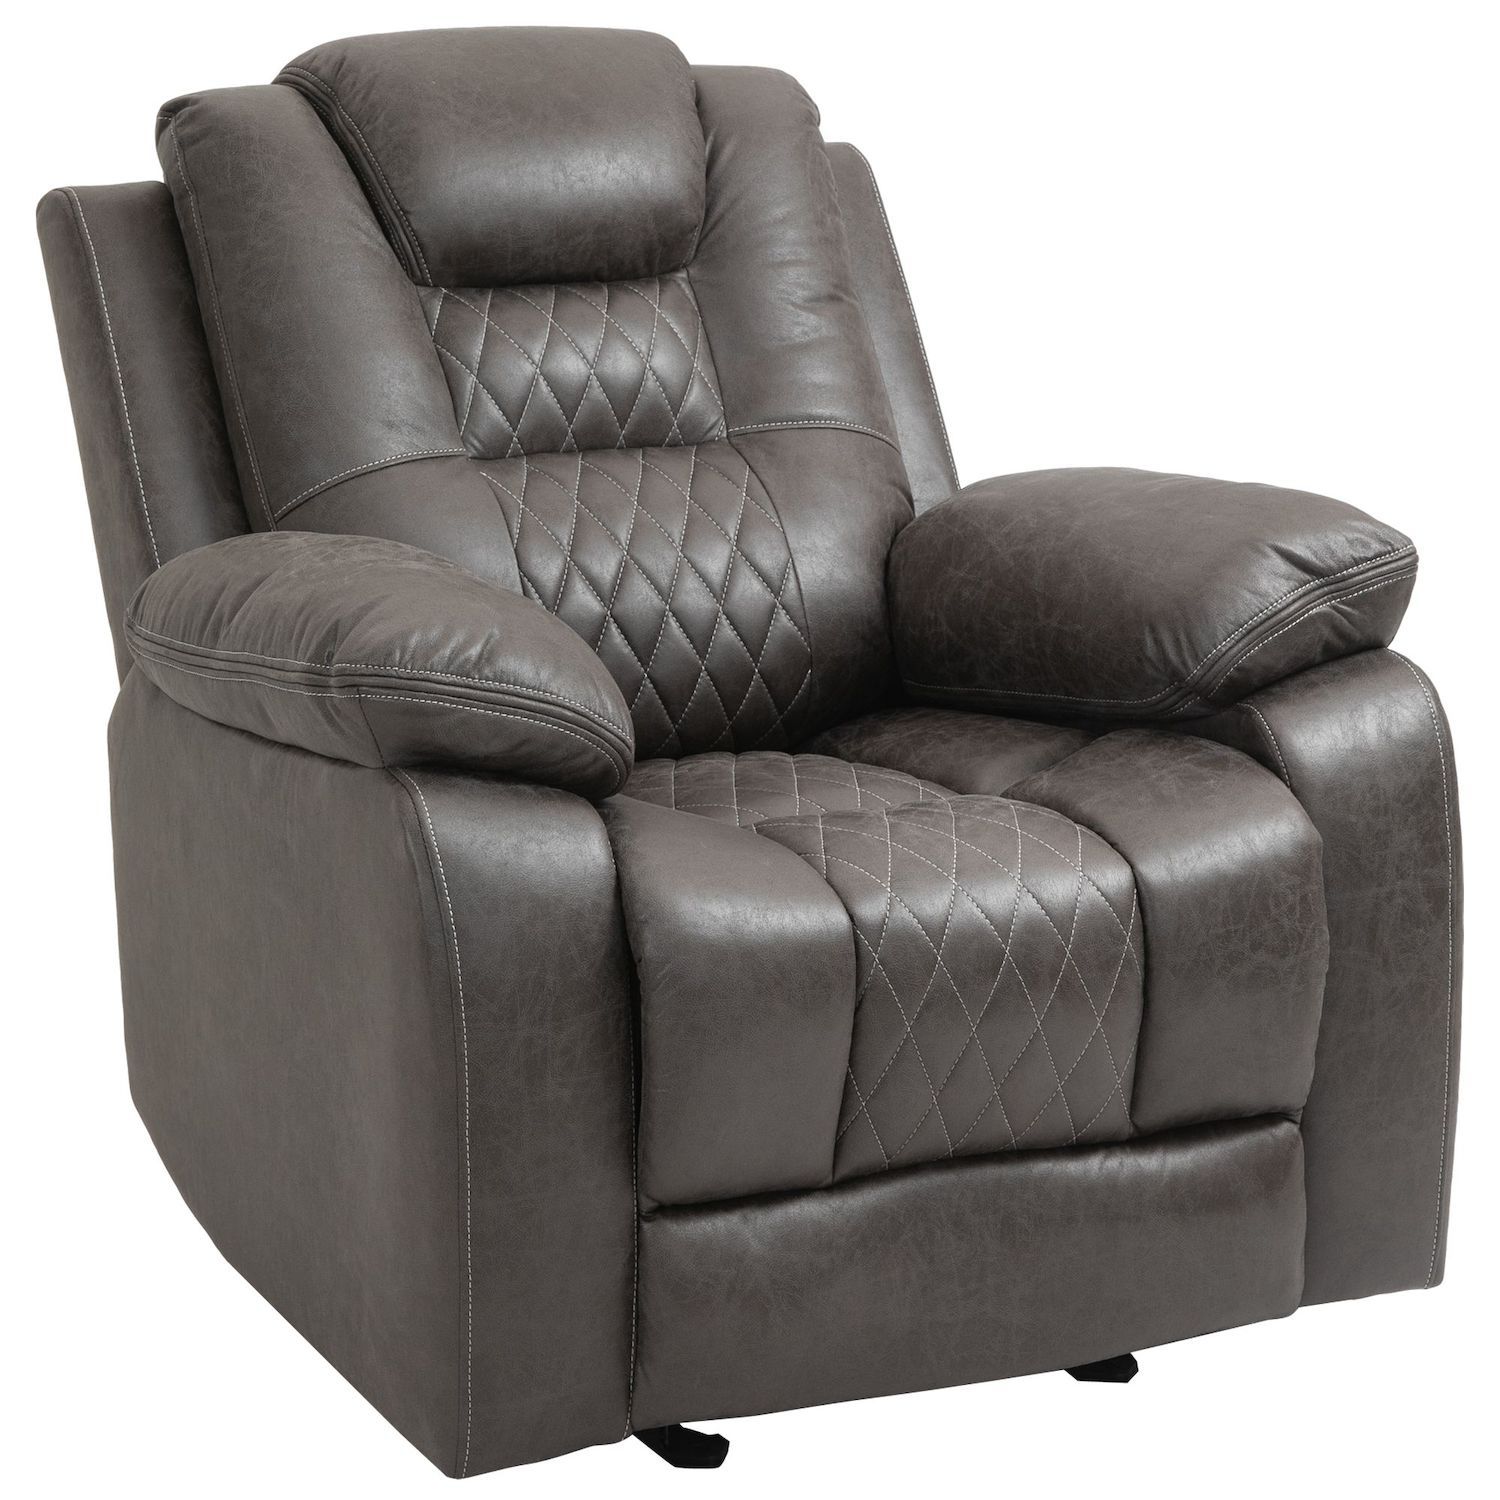 HOMCOM Manual Recliner Armchair PU Leather Lounge Chair w